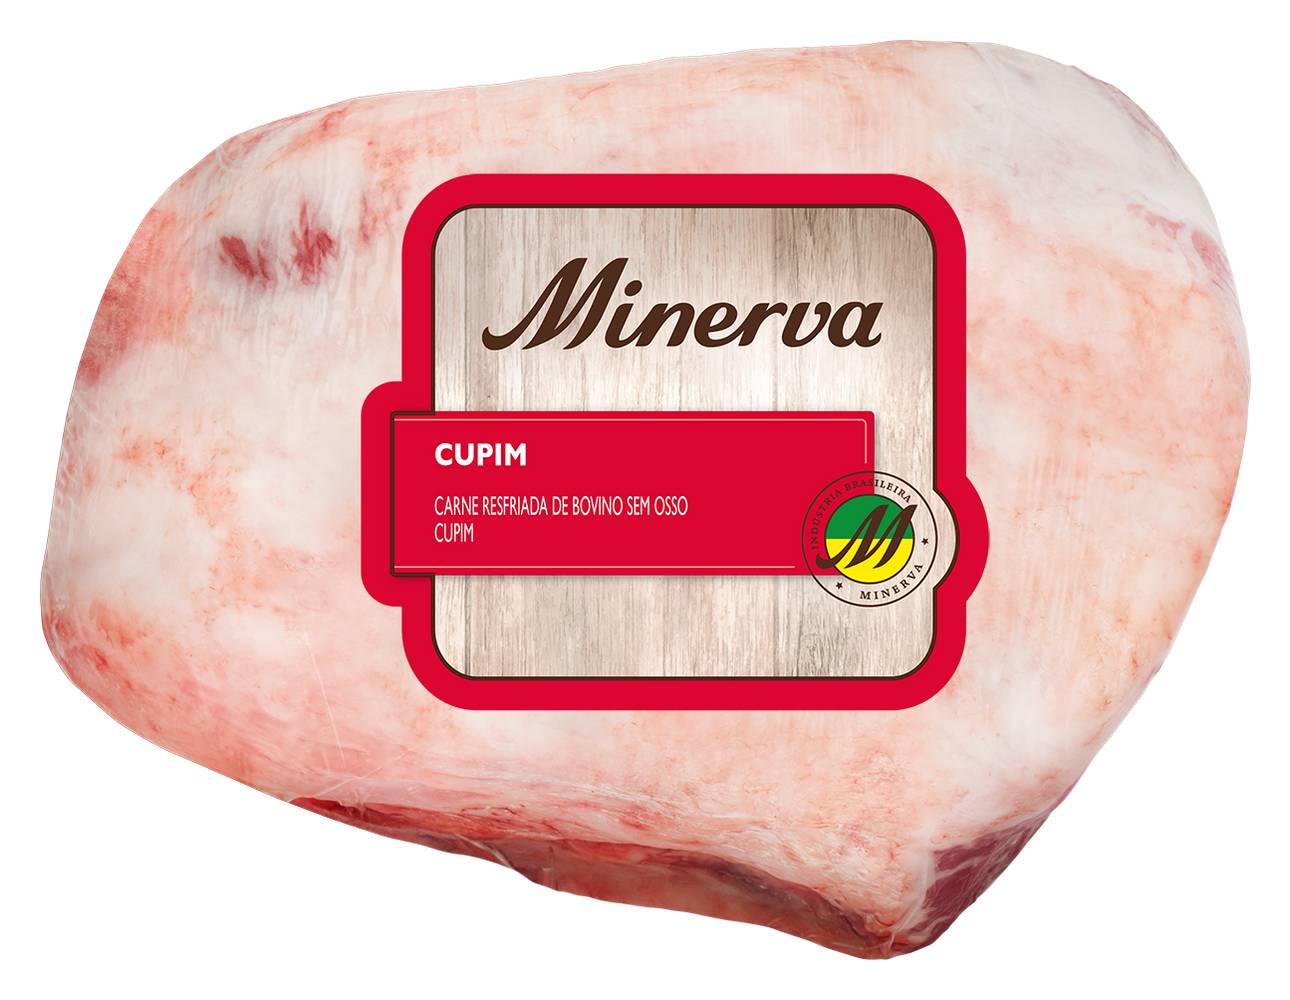 Minerva Cupim bovino congelado (Embalagem 3,19 kg aprox)